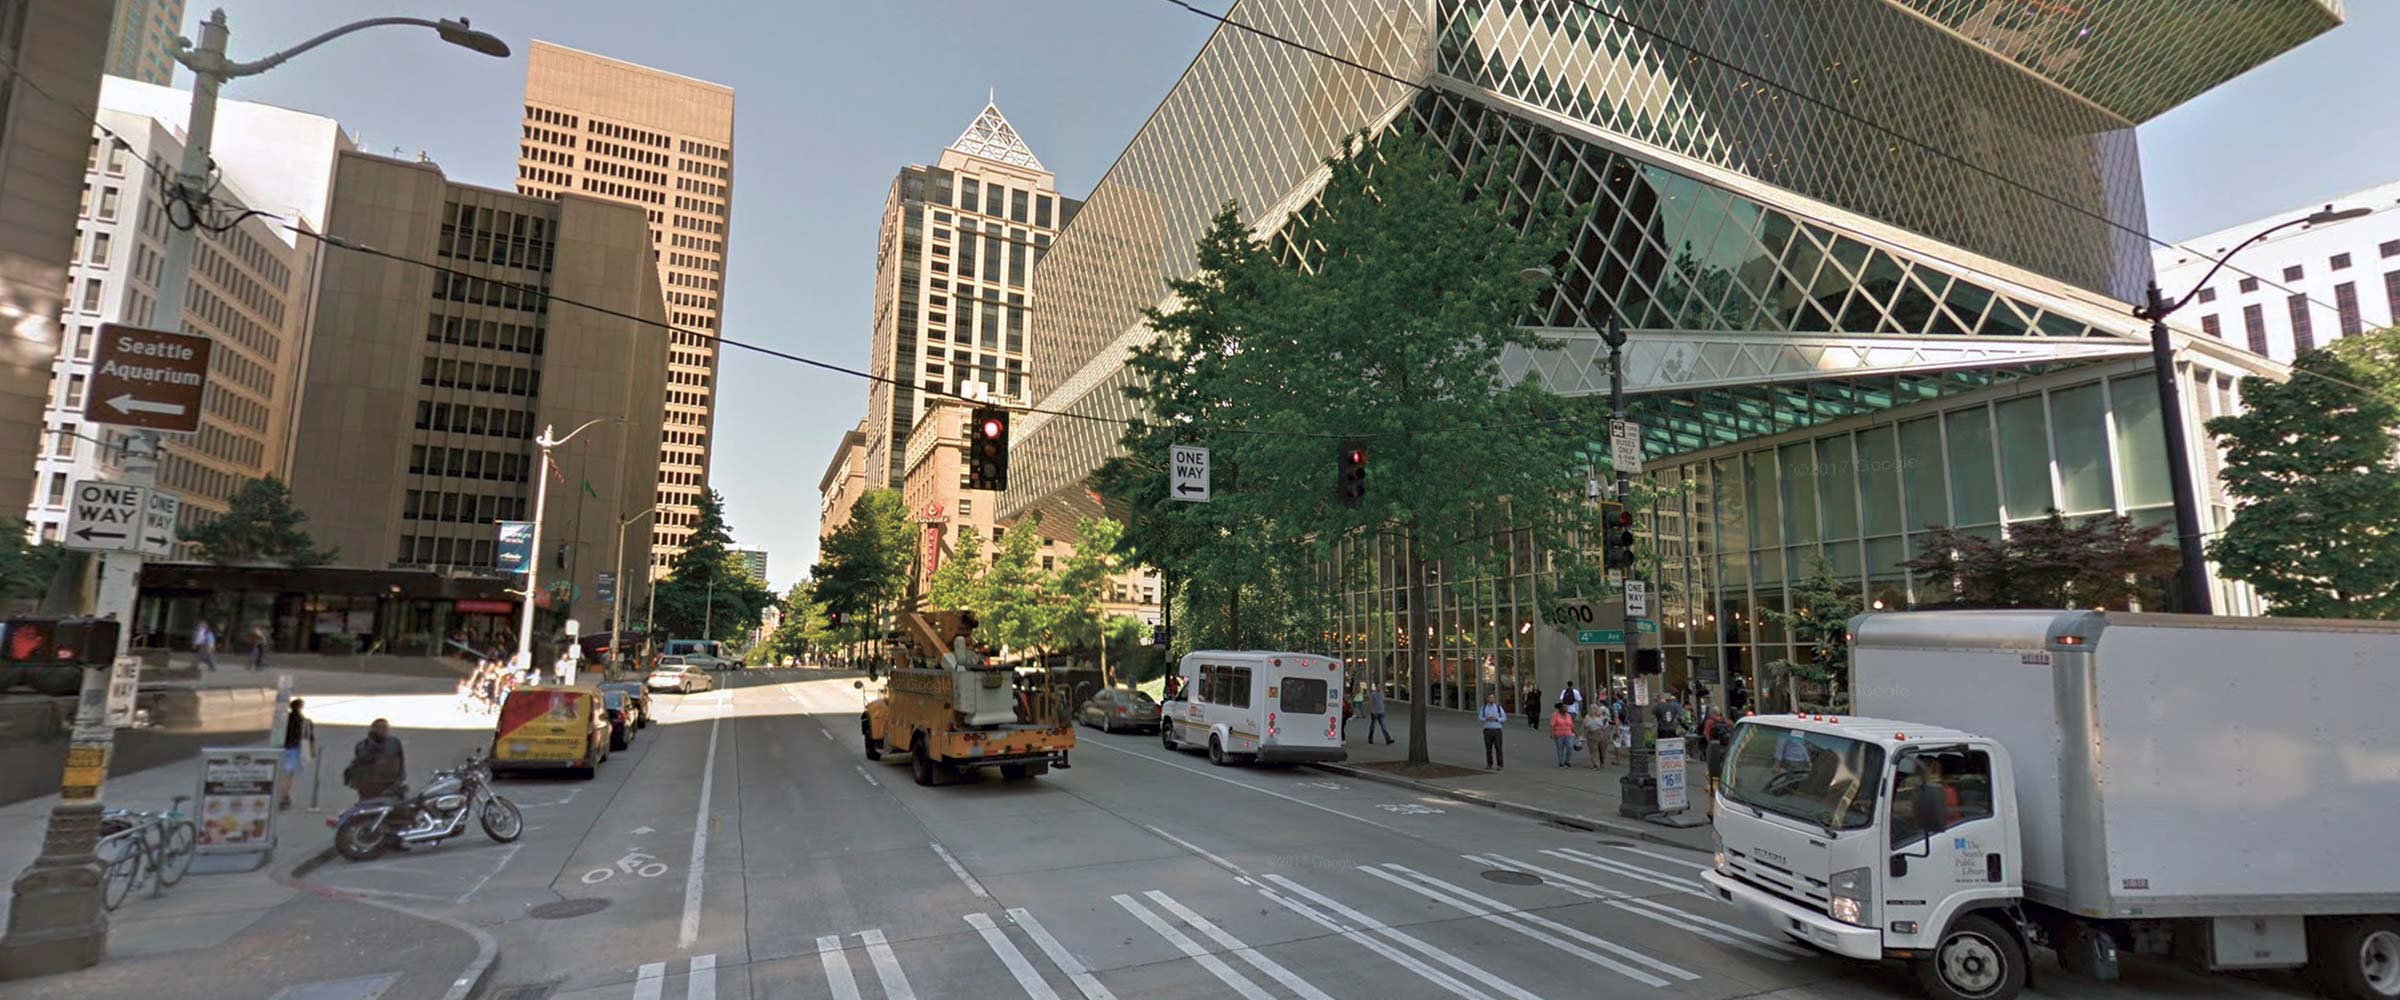 Seattle, Washington / Image © 2019 Google Street View